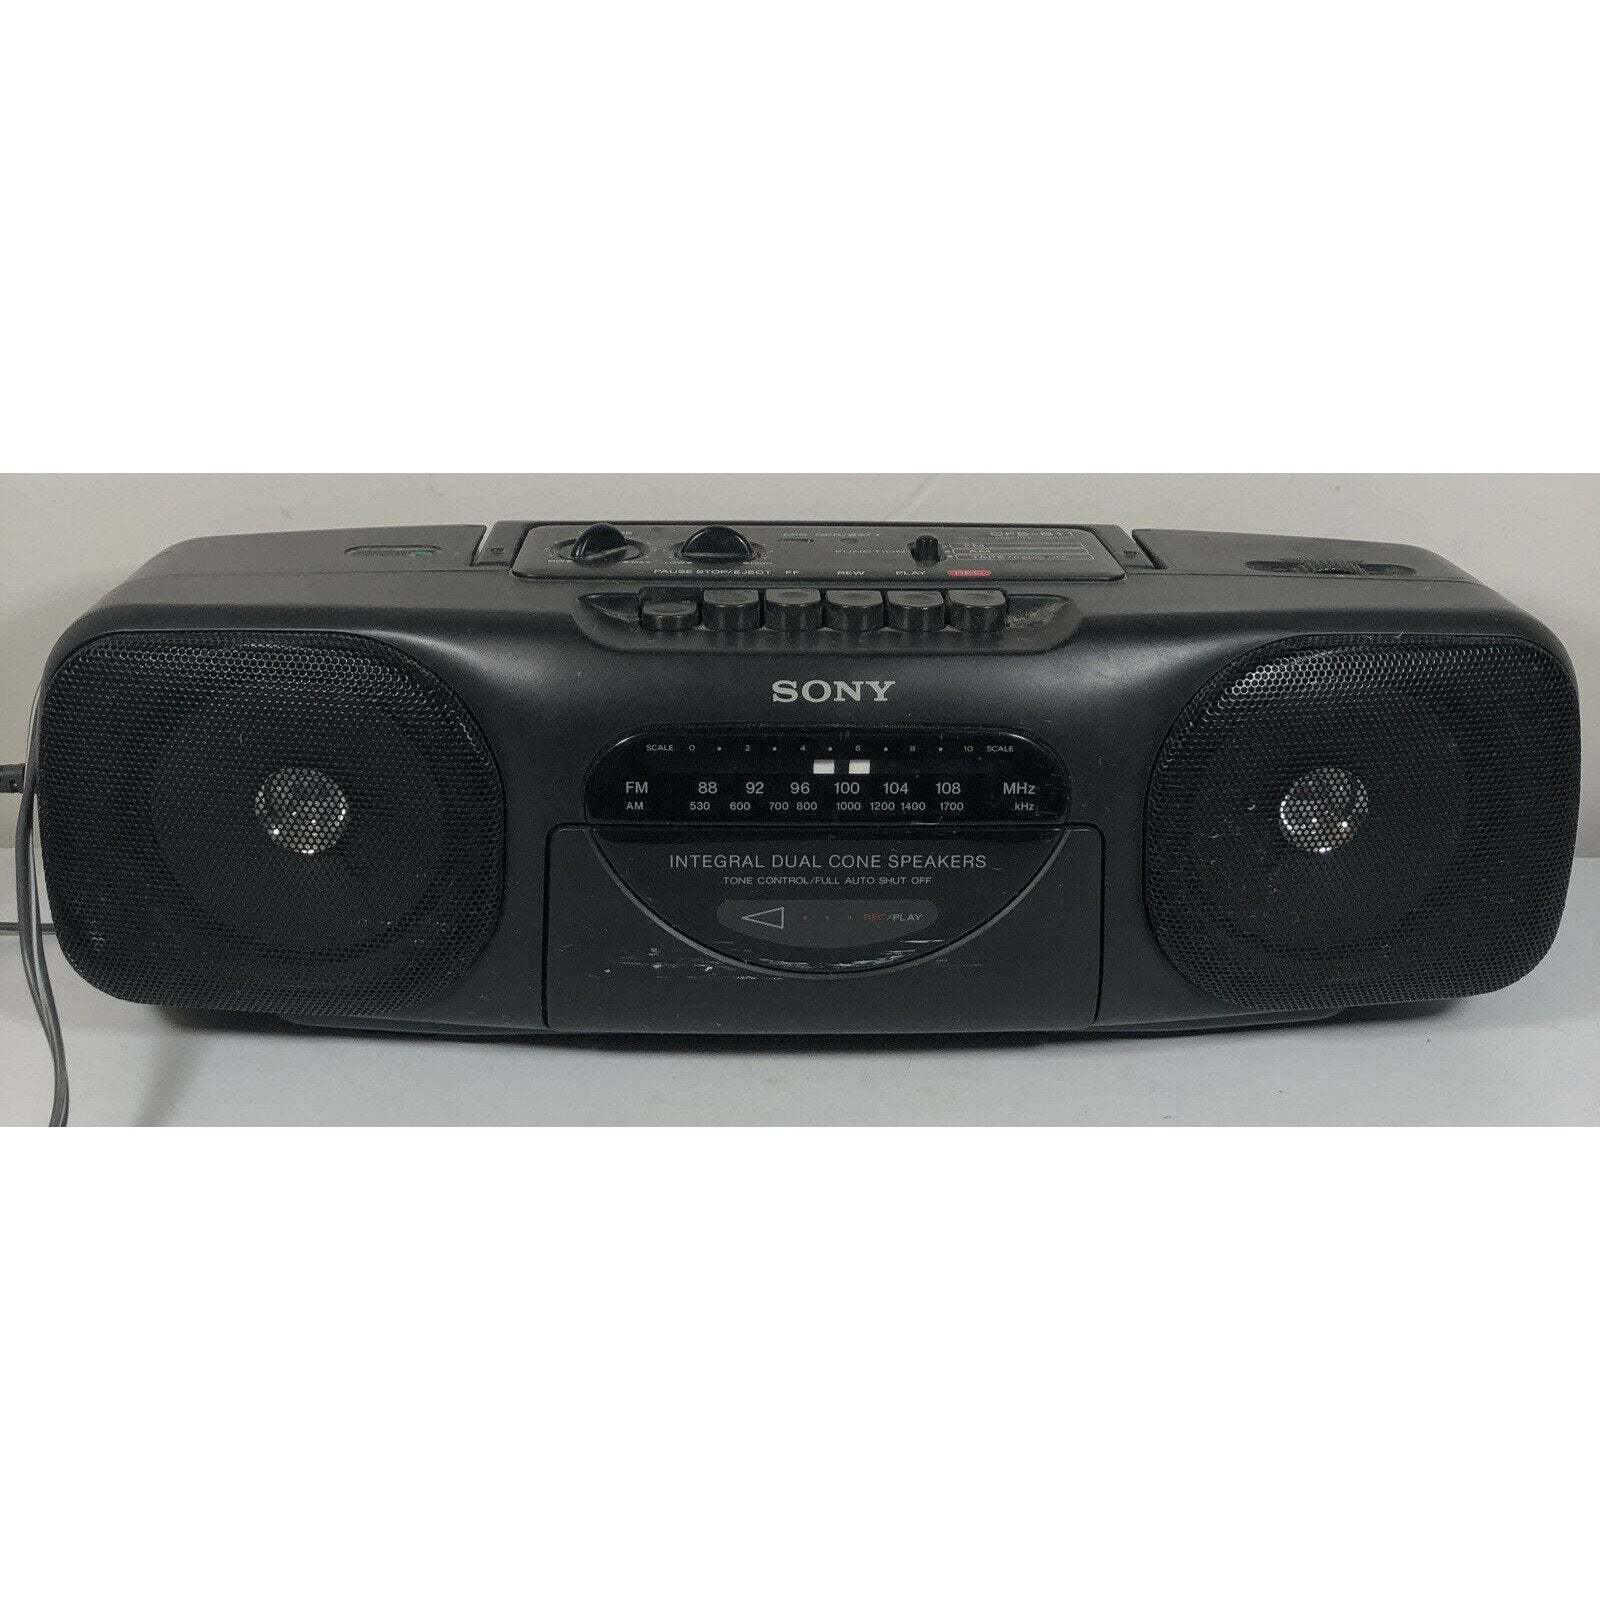 Sony CFS-B11 Boombox "Ghetto Blaster" Dual Cone Speakers Cassette Radio Stereo - $90.00